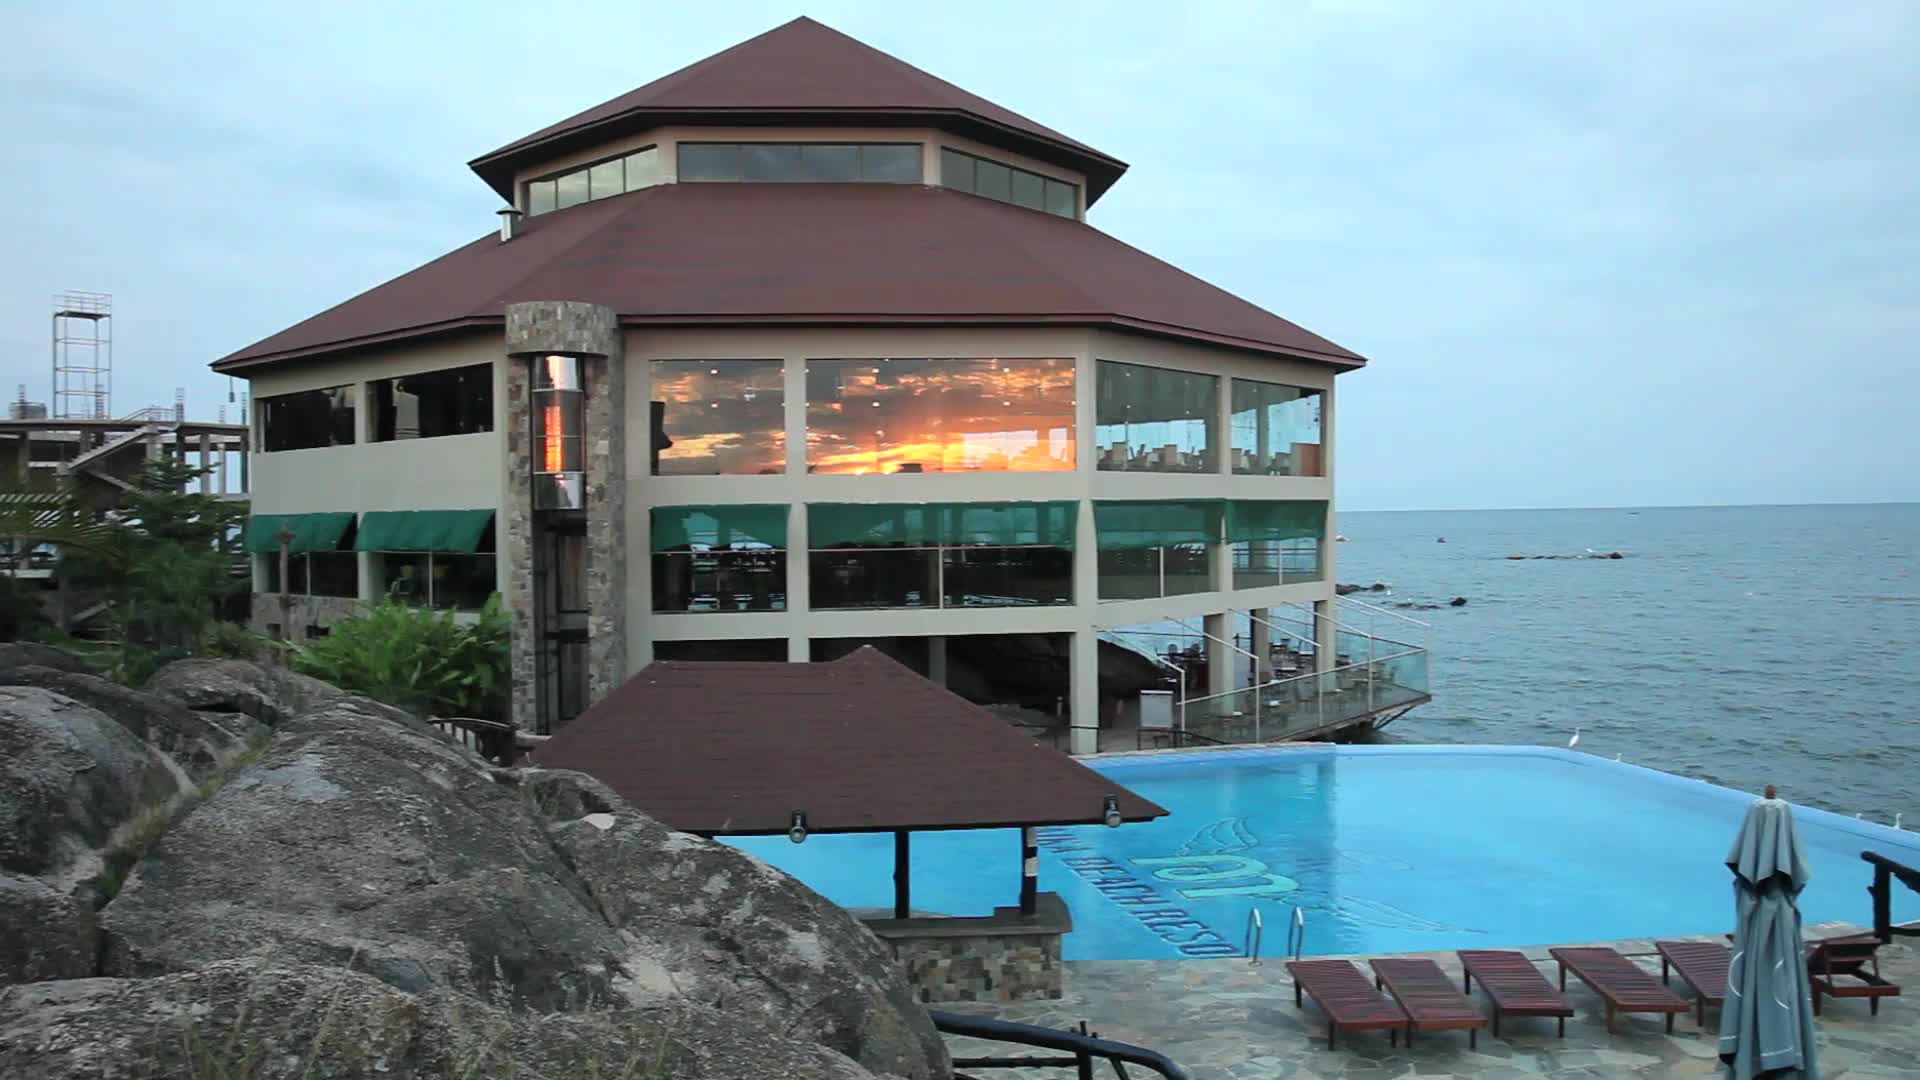 Malaika Beach Resort In Tanzania